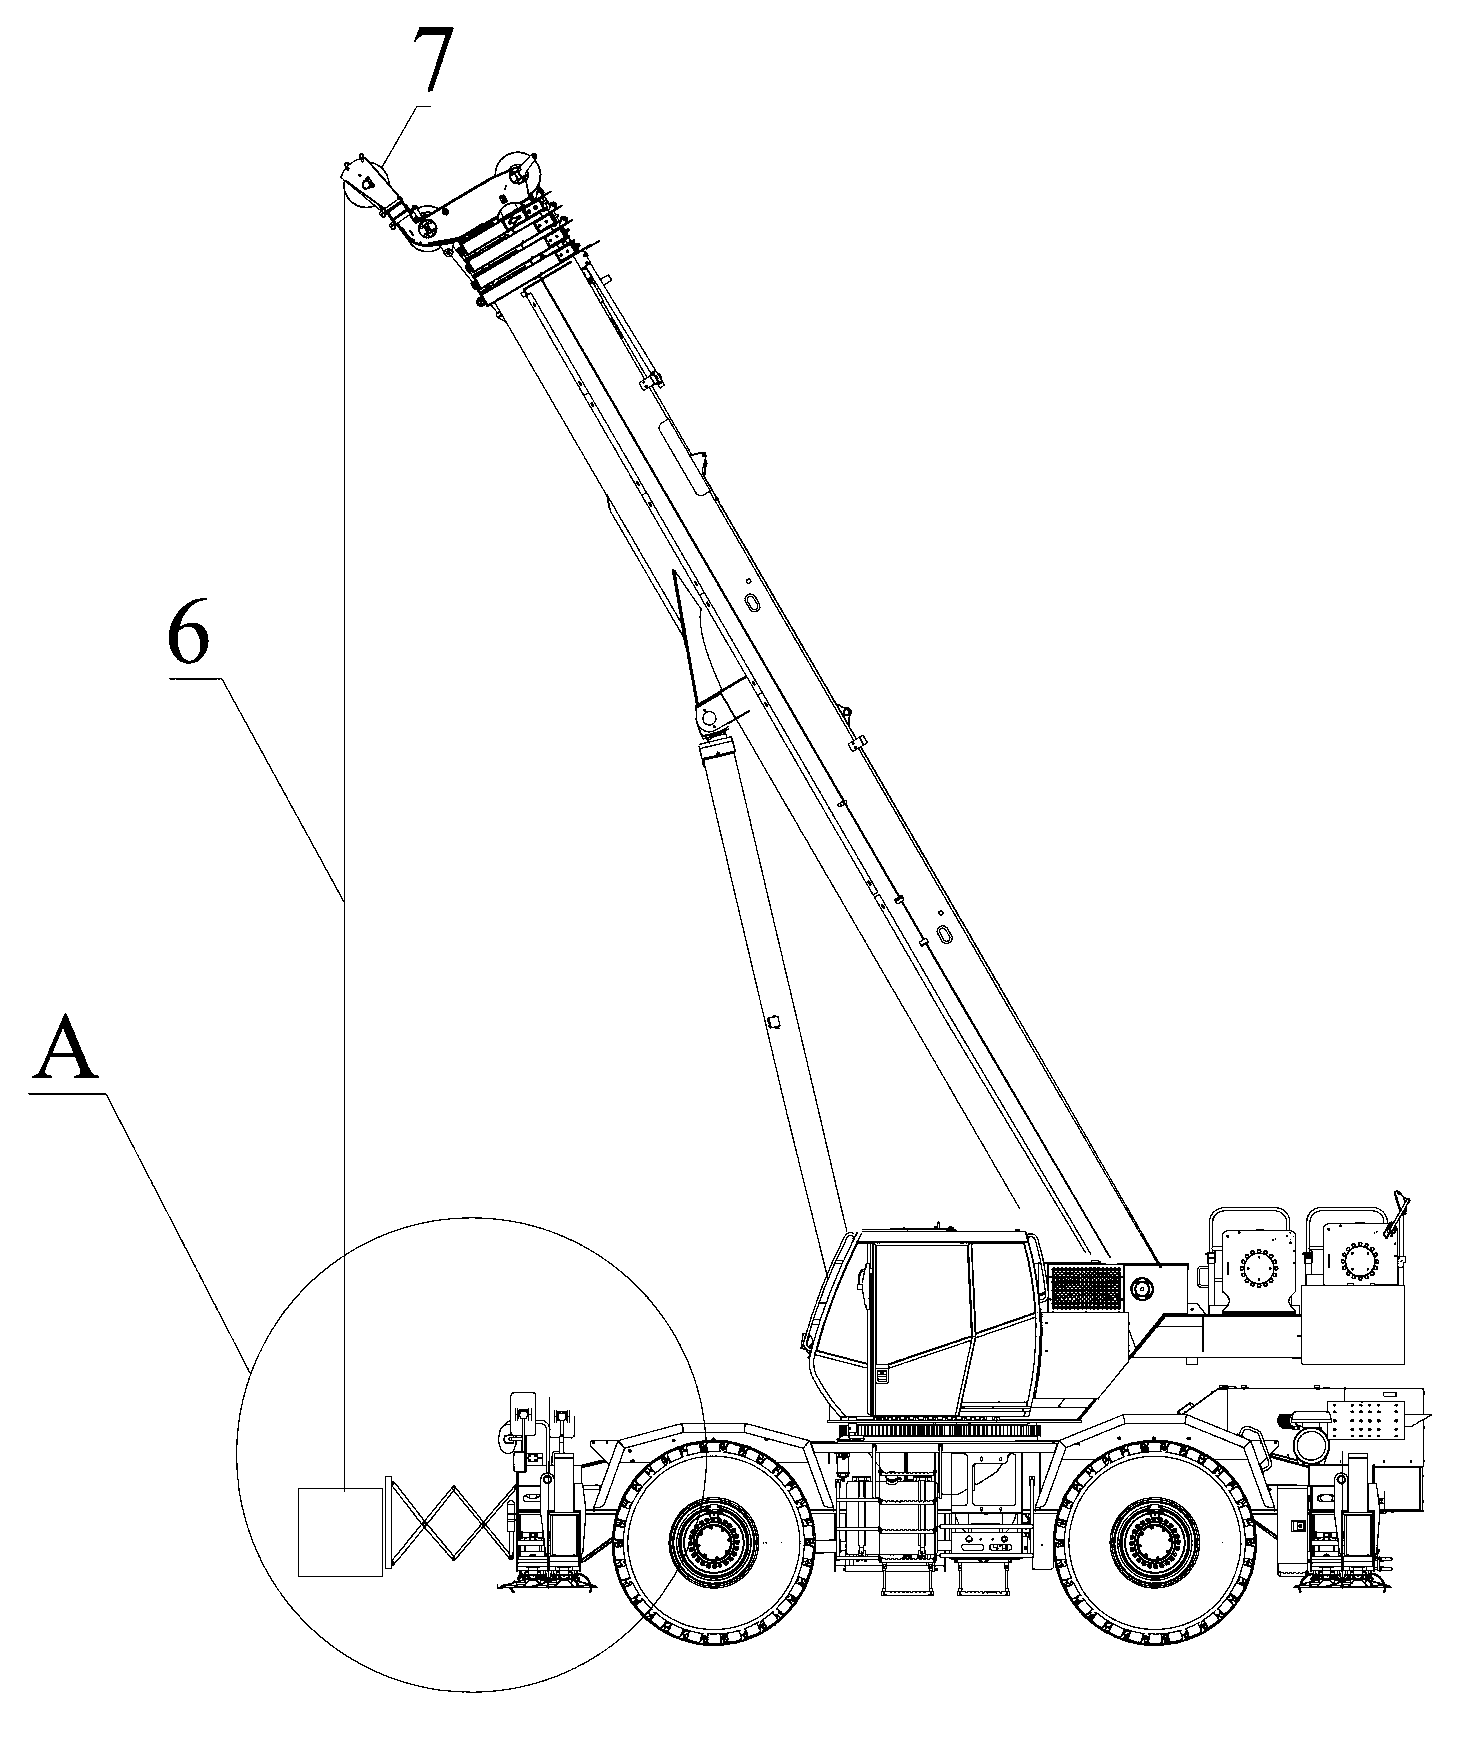 Crane protective device and crane